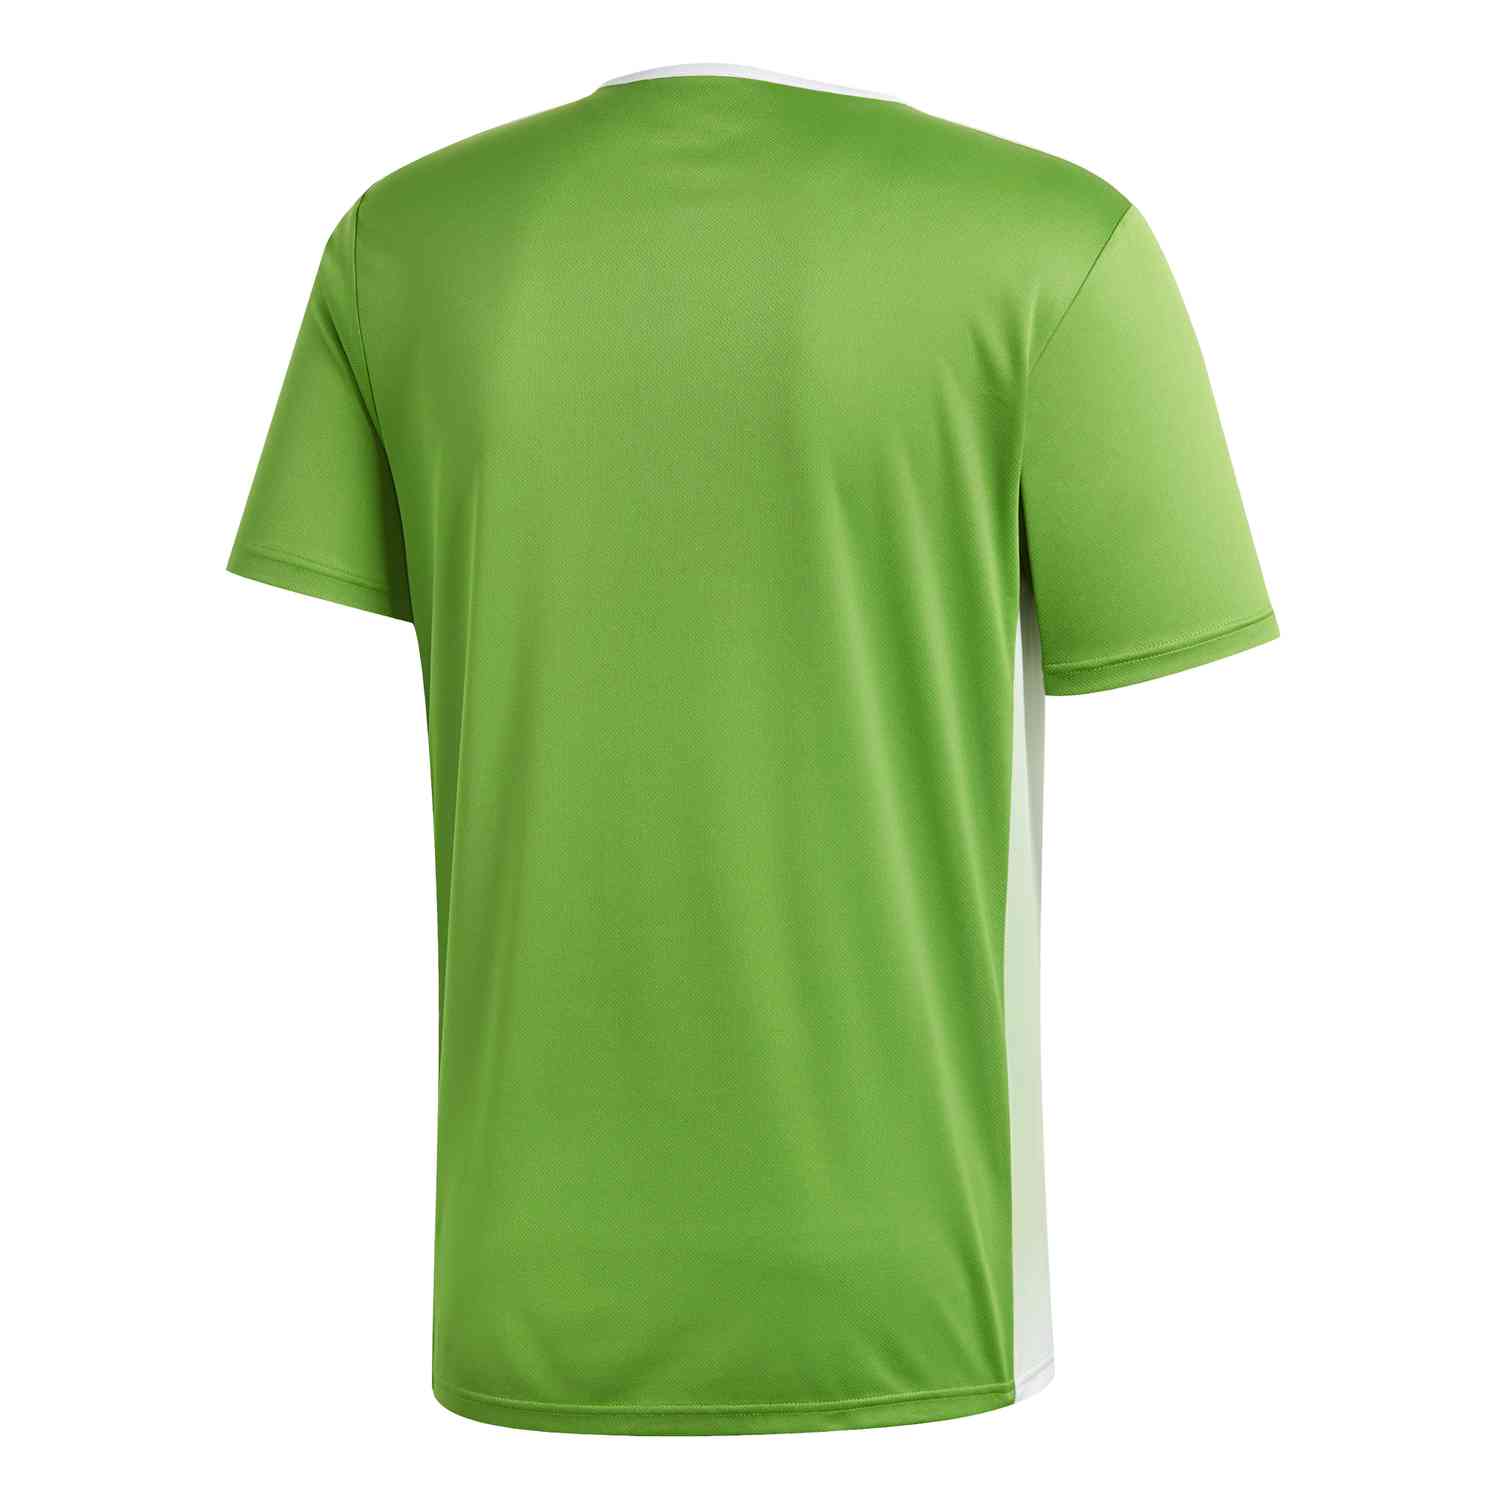 adidas Entrada 18 Jersey - Rave Green/White - SoccerPro